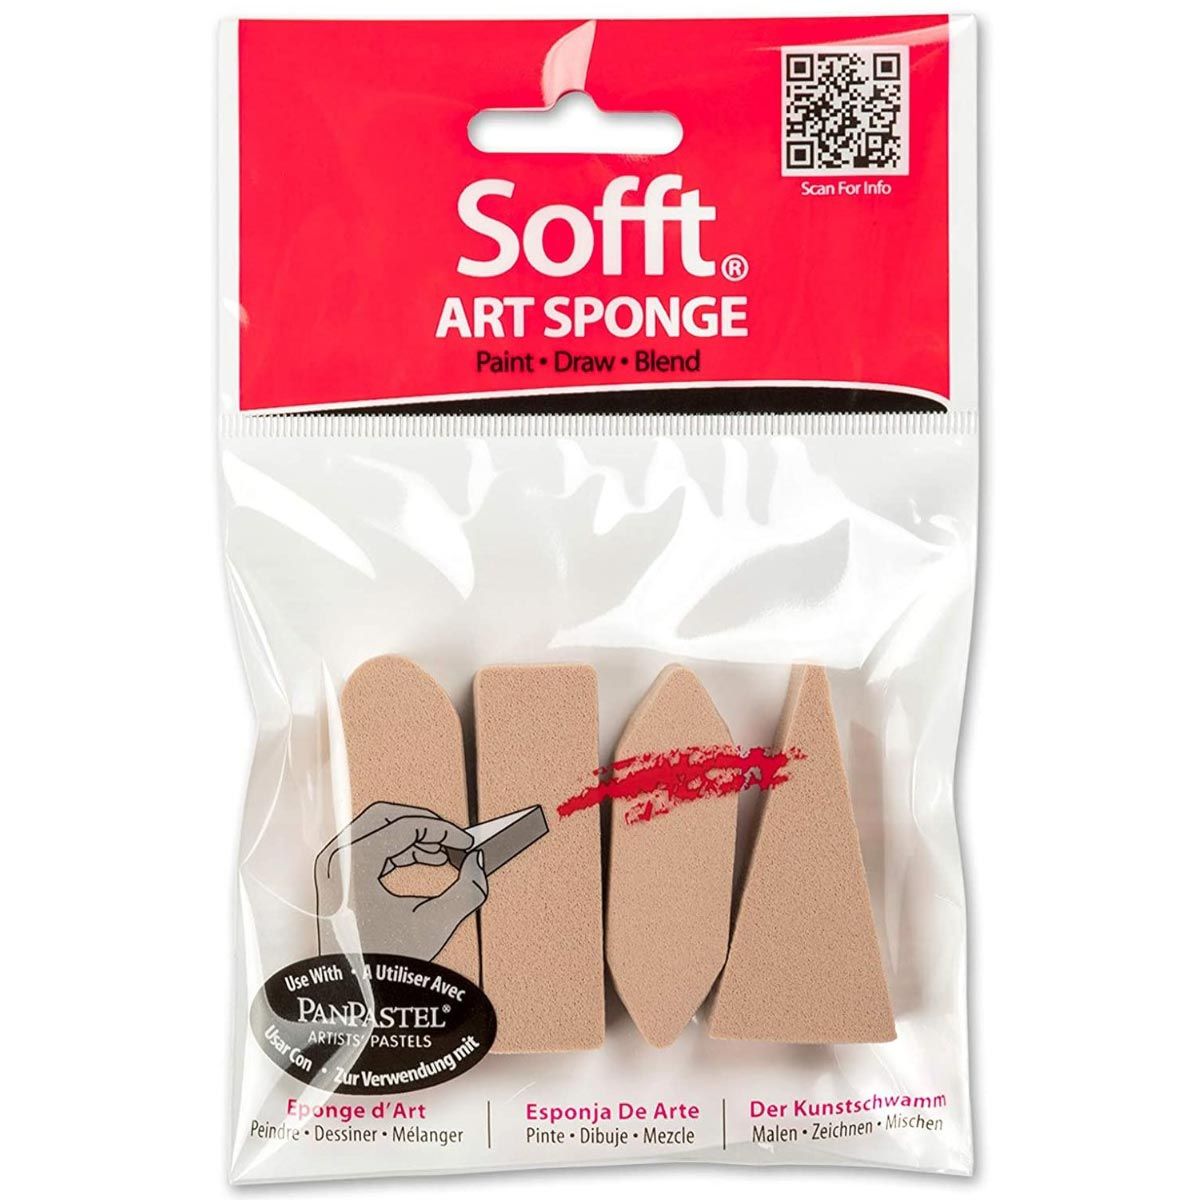 Sofft Tool Art Sponge Bars Mixed Pack of 4